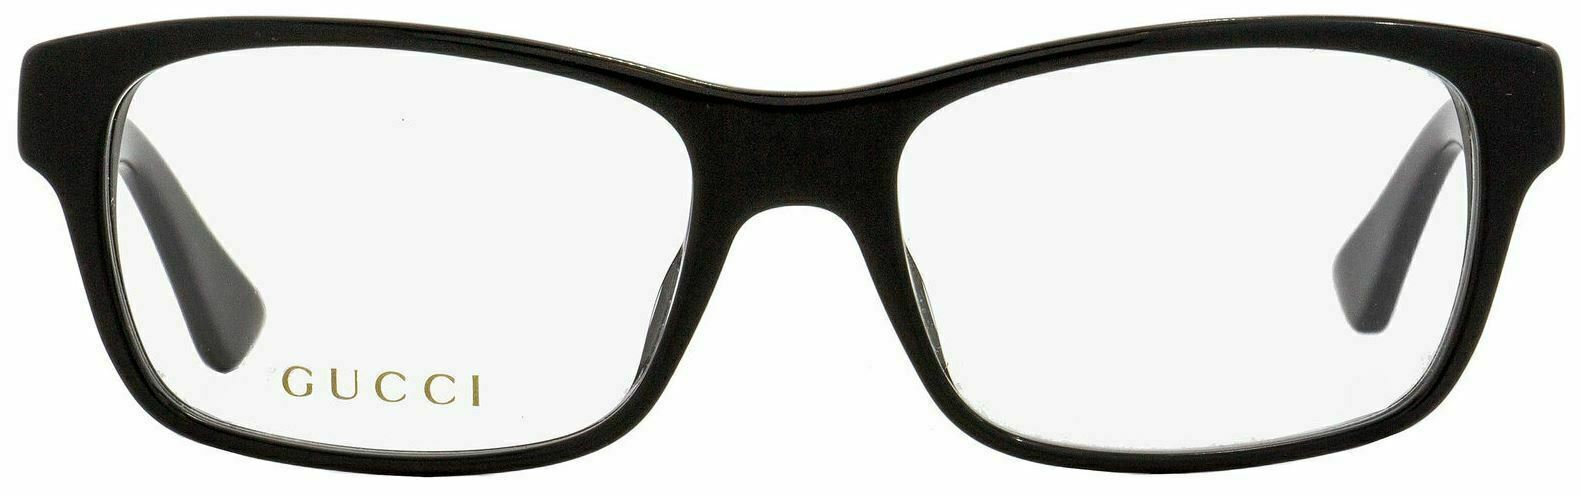 Gucci GG0006O 001 Rectangle Black/black  Men's Eyeglasses